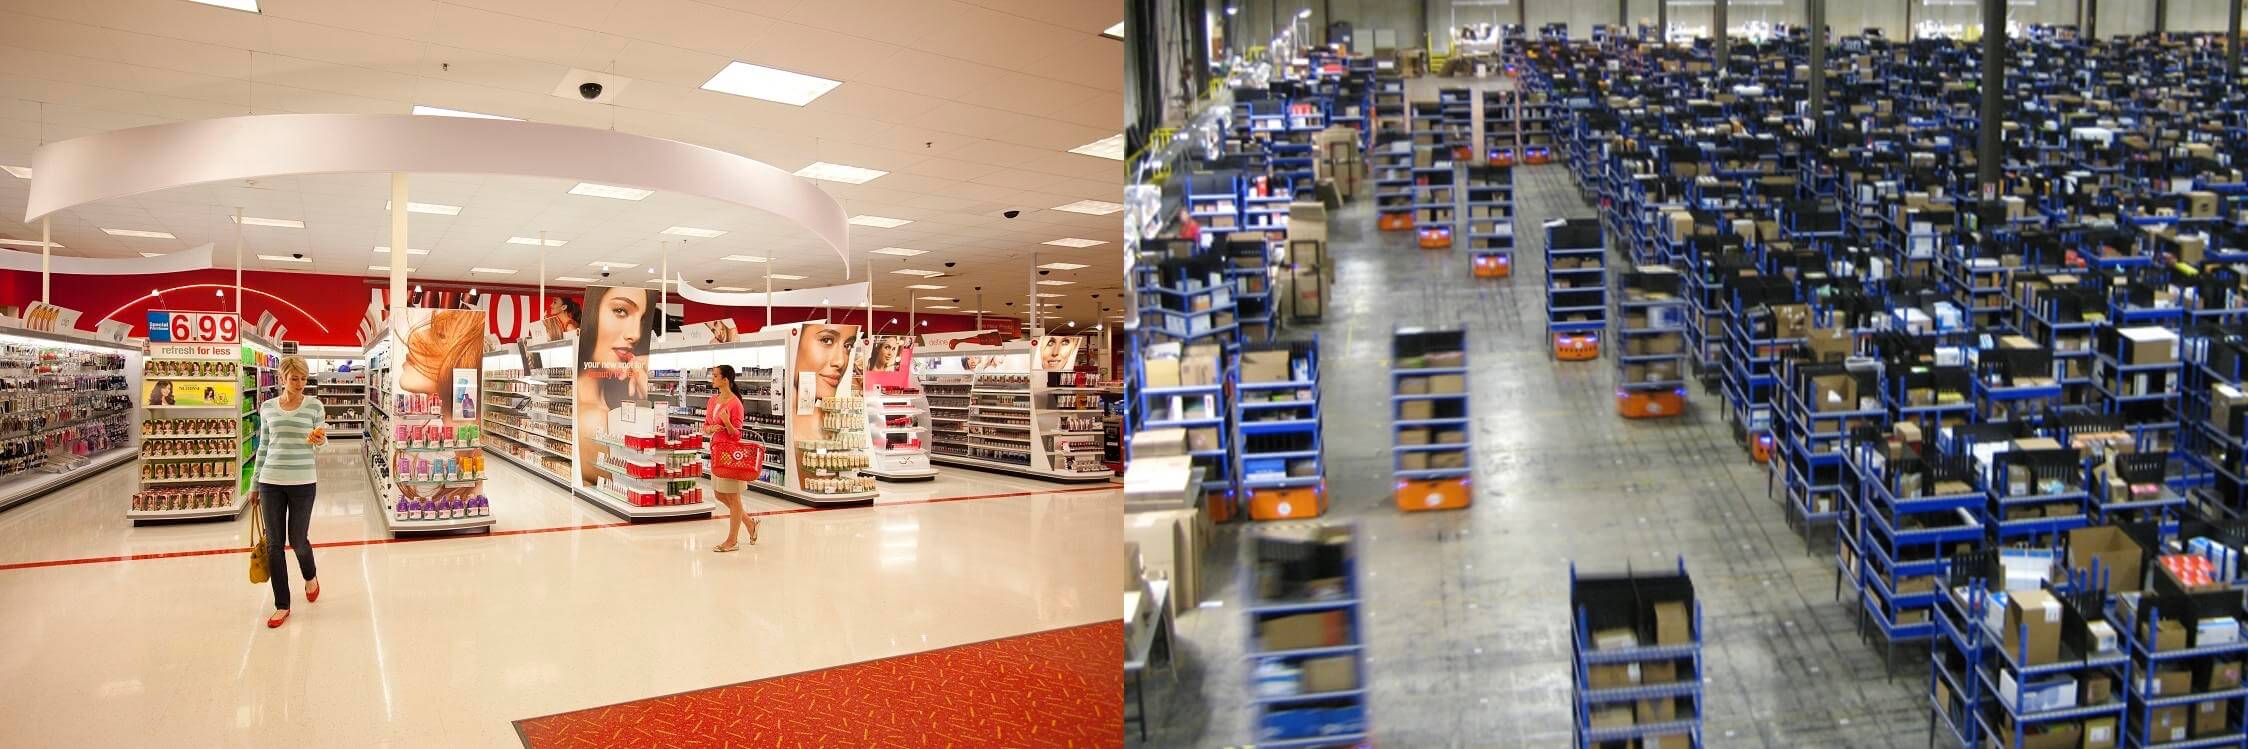 Target stores vs Amazon warehouses